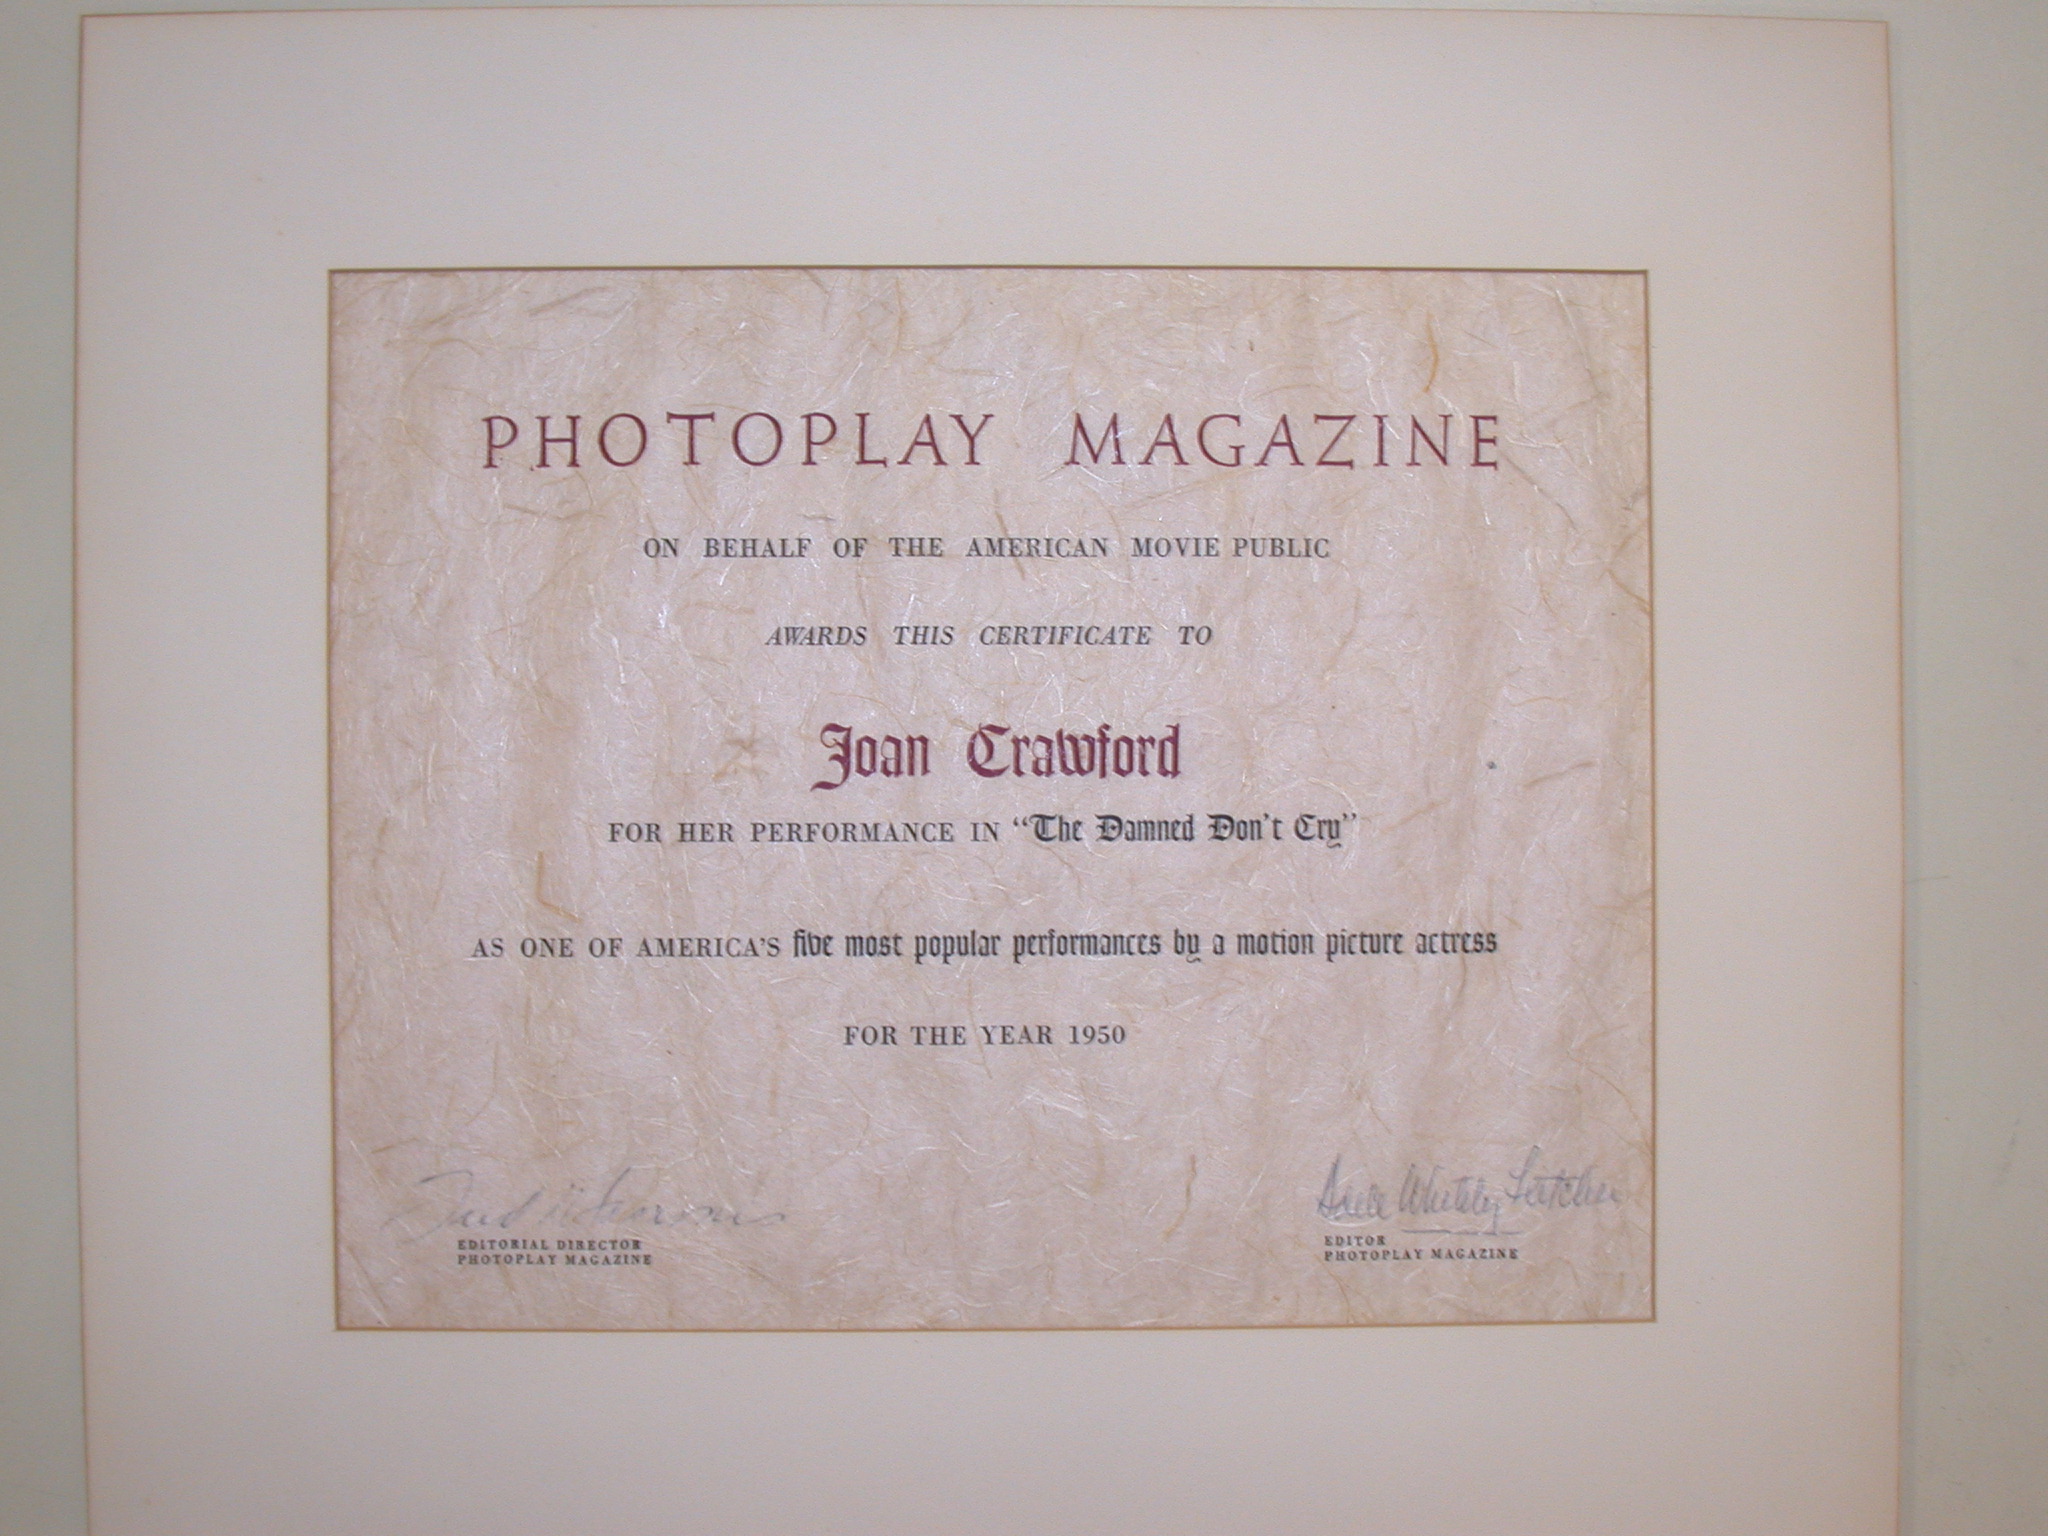 Photoplay Magazine Award certificate